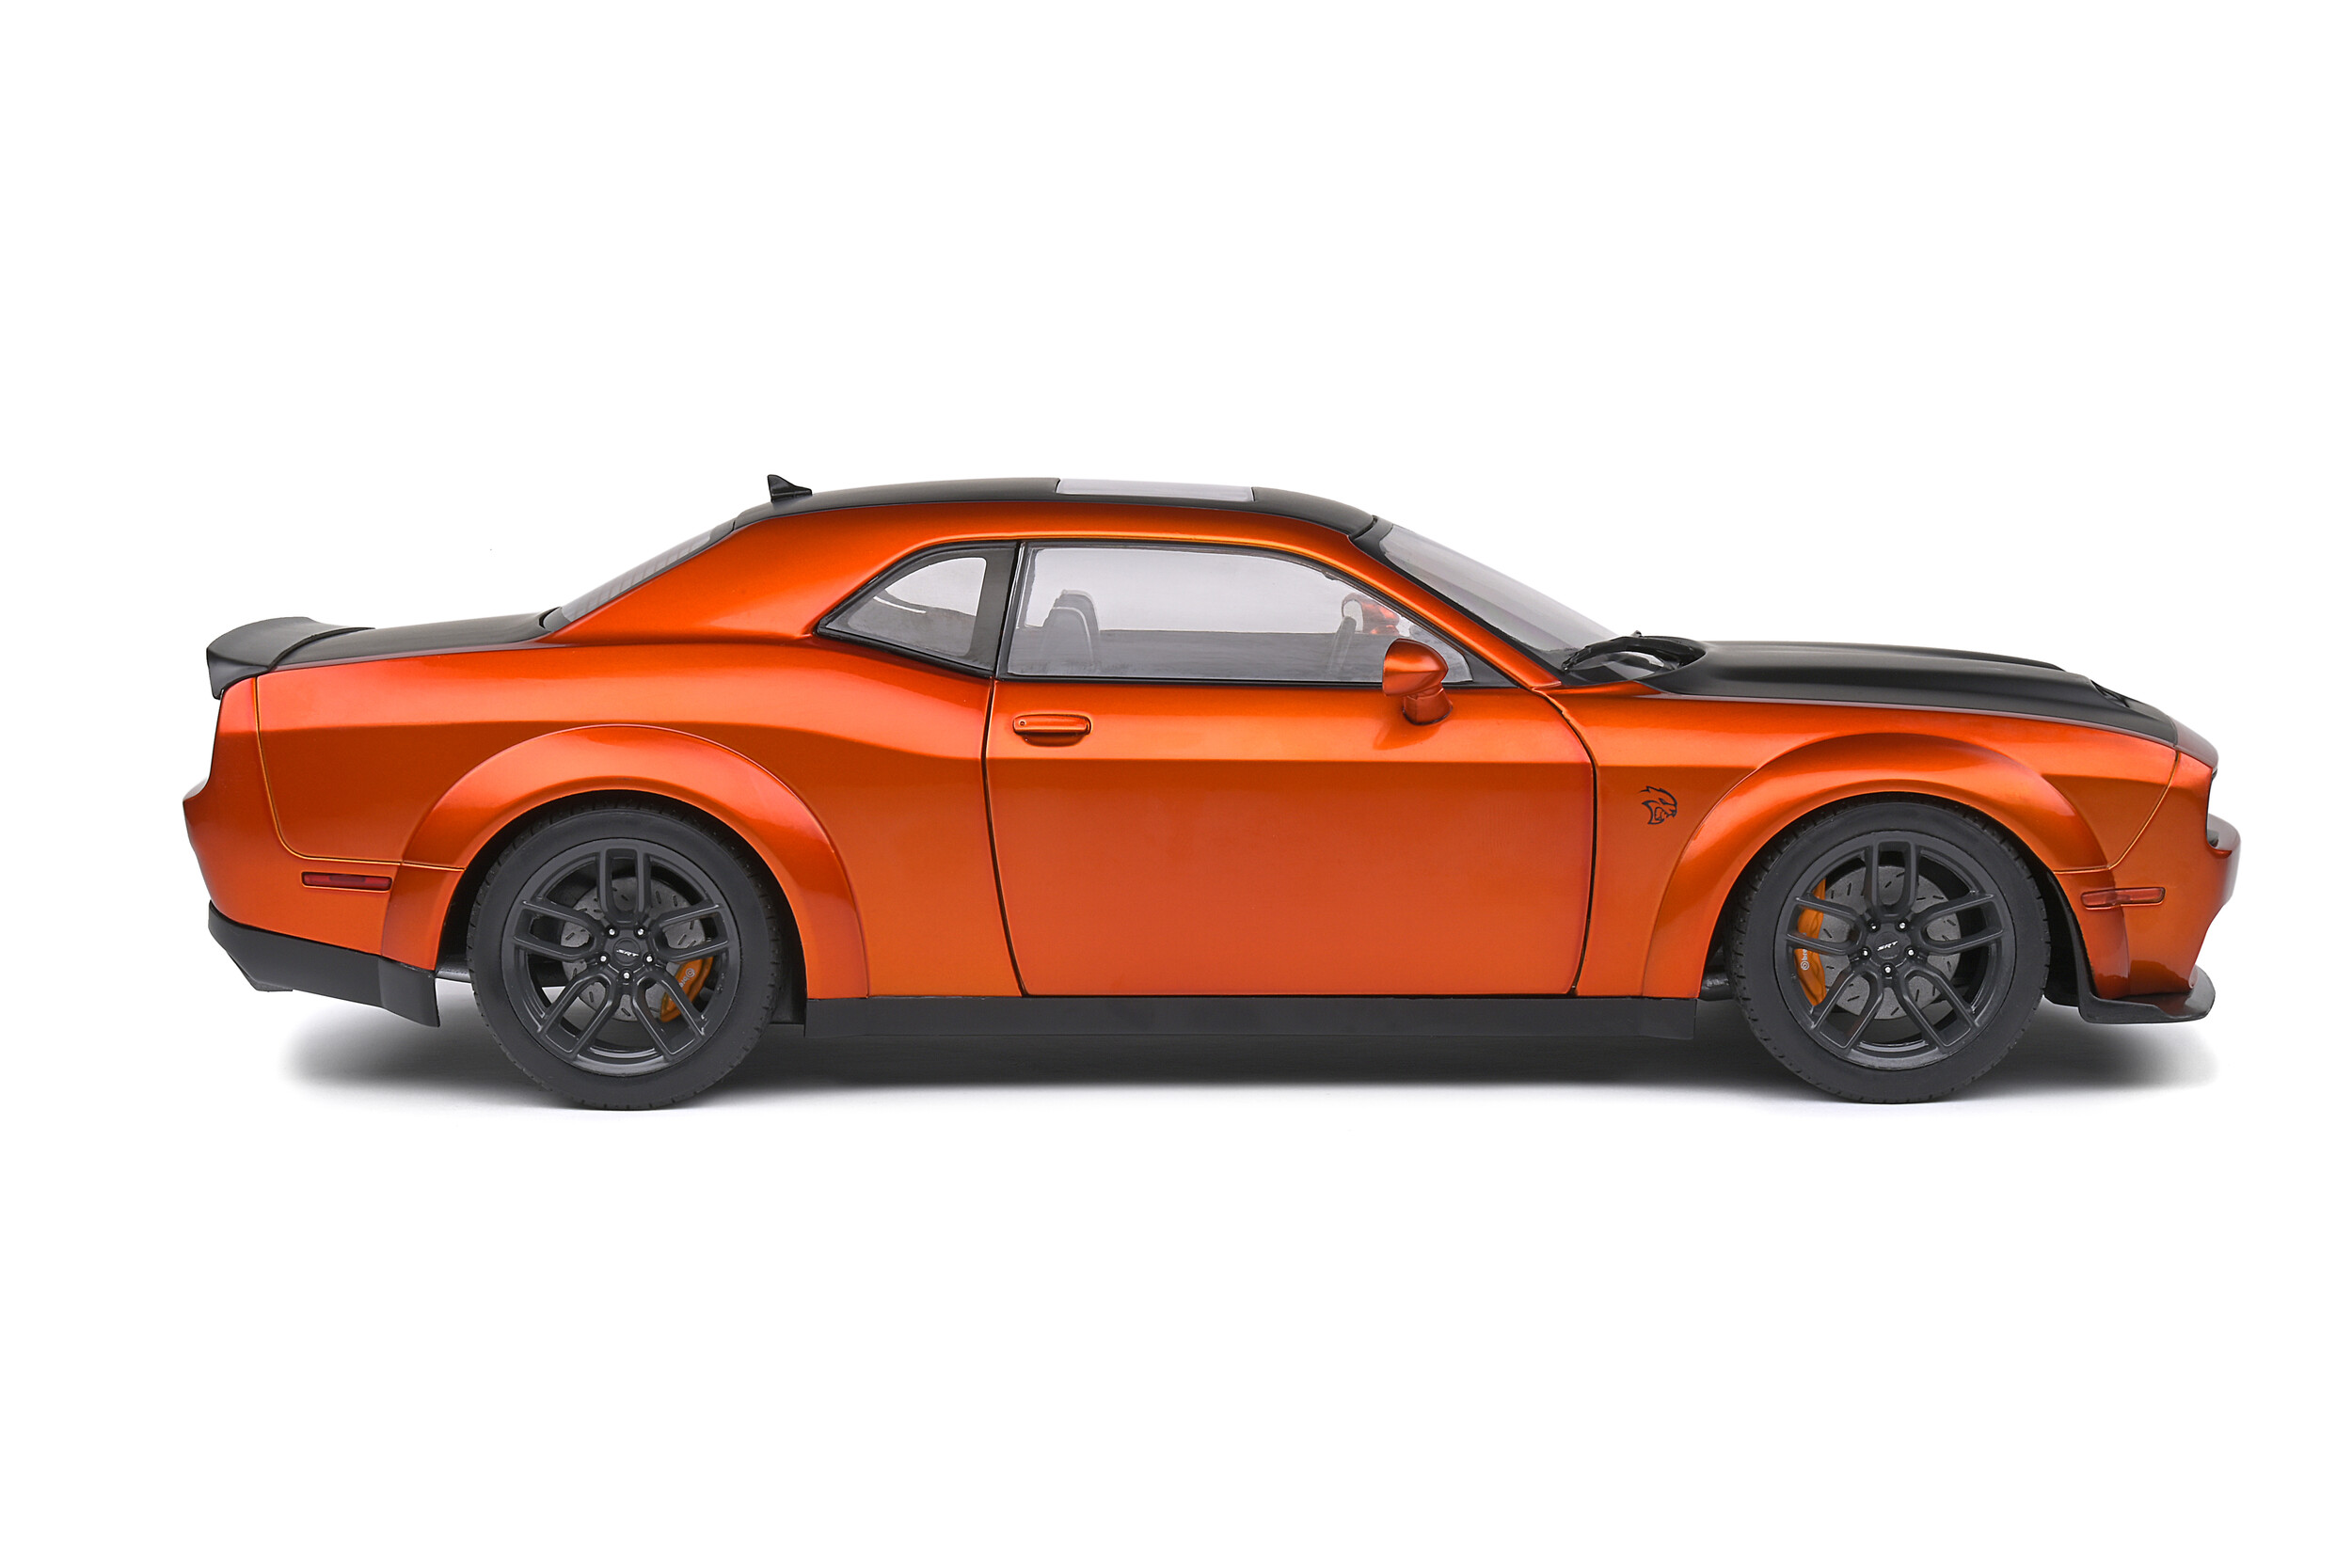 Solido 1:18 Dodge Challenger SRT Widebody Orange Metallic 2020 (S1805703)  Diecast car model available in June/July pre-order now